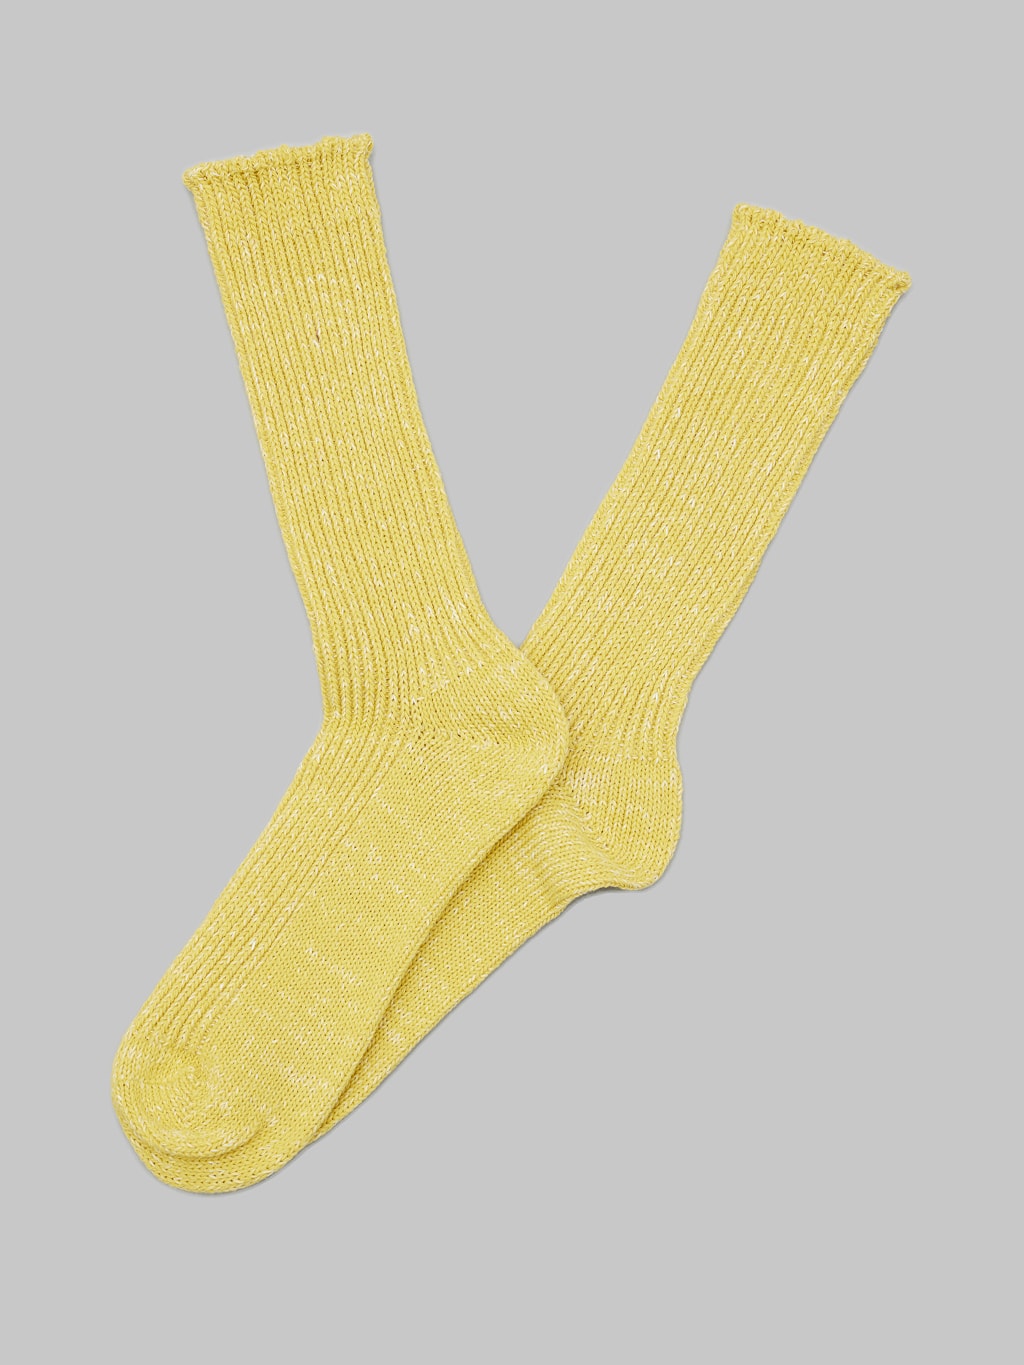 nishiguchi kutsushita hemp cotton ribbed socks vintage yellow japanese made